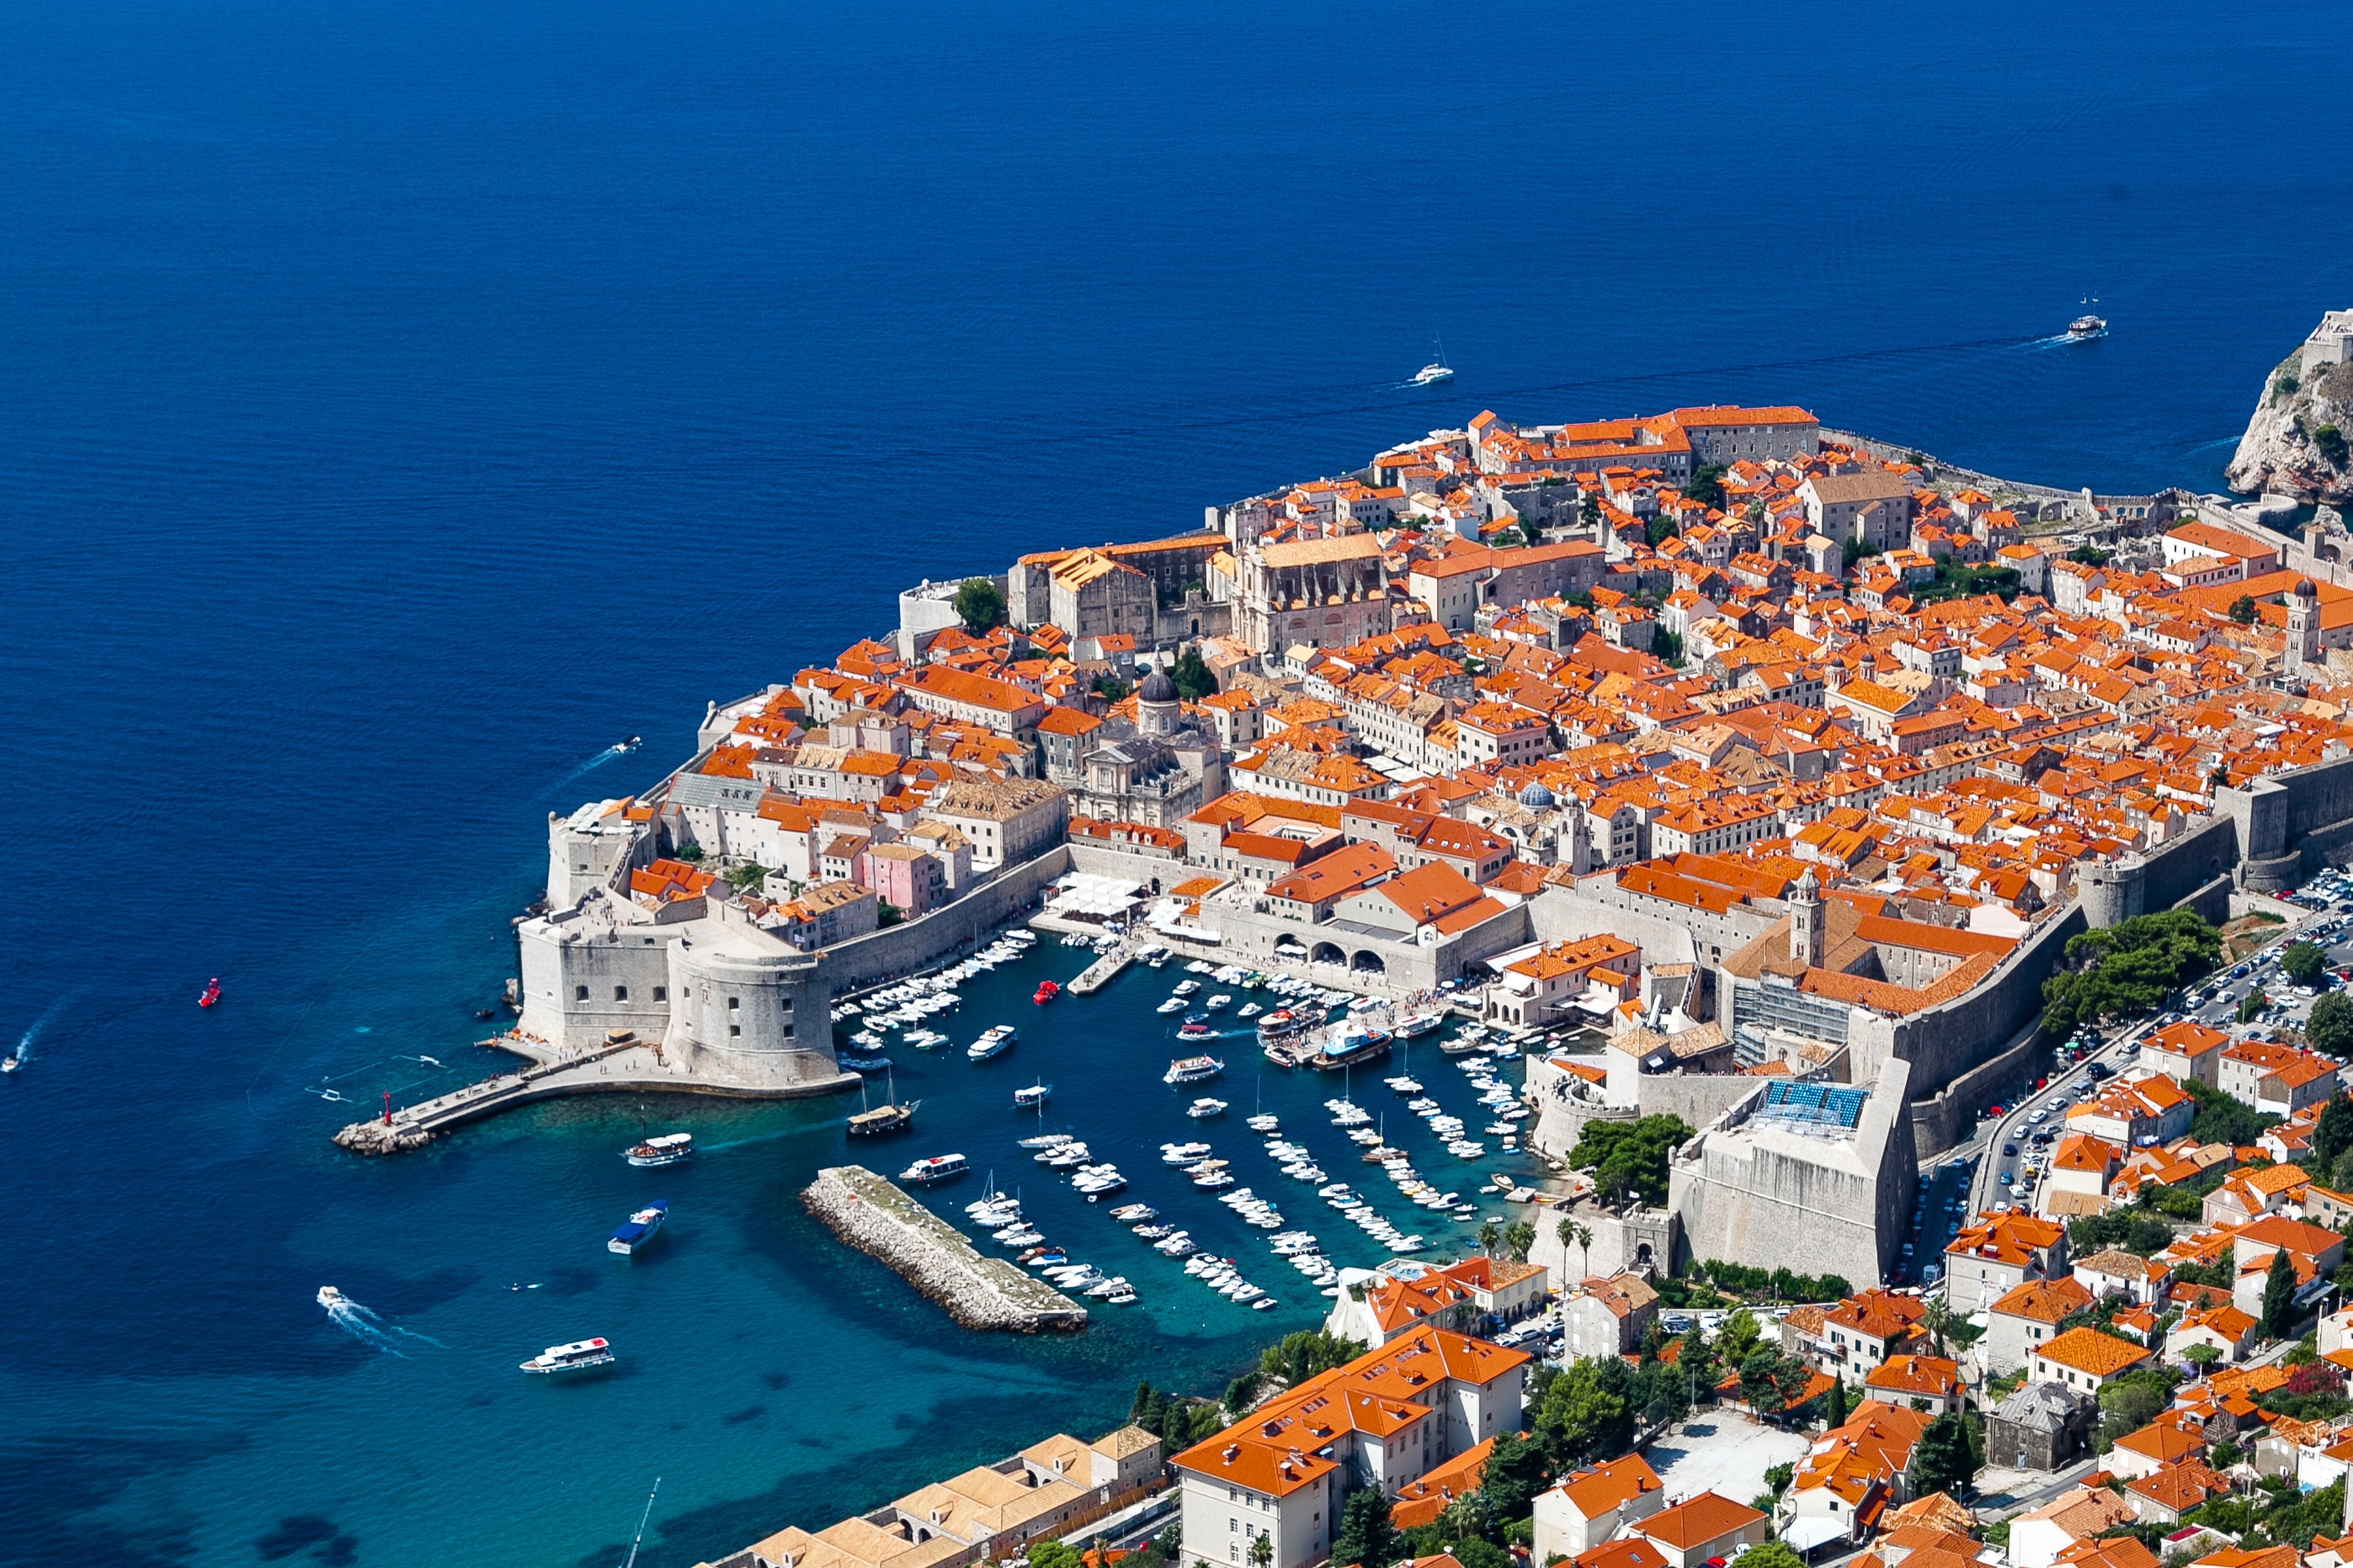 The old town of Dubrovnik, Croatia by László Tóth